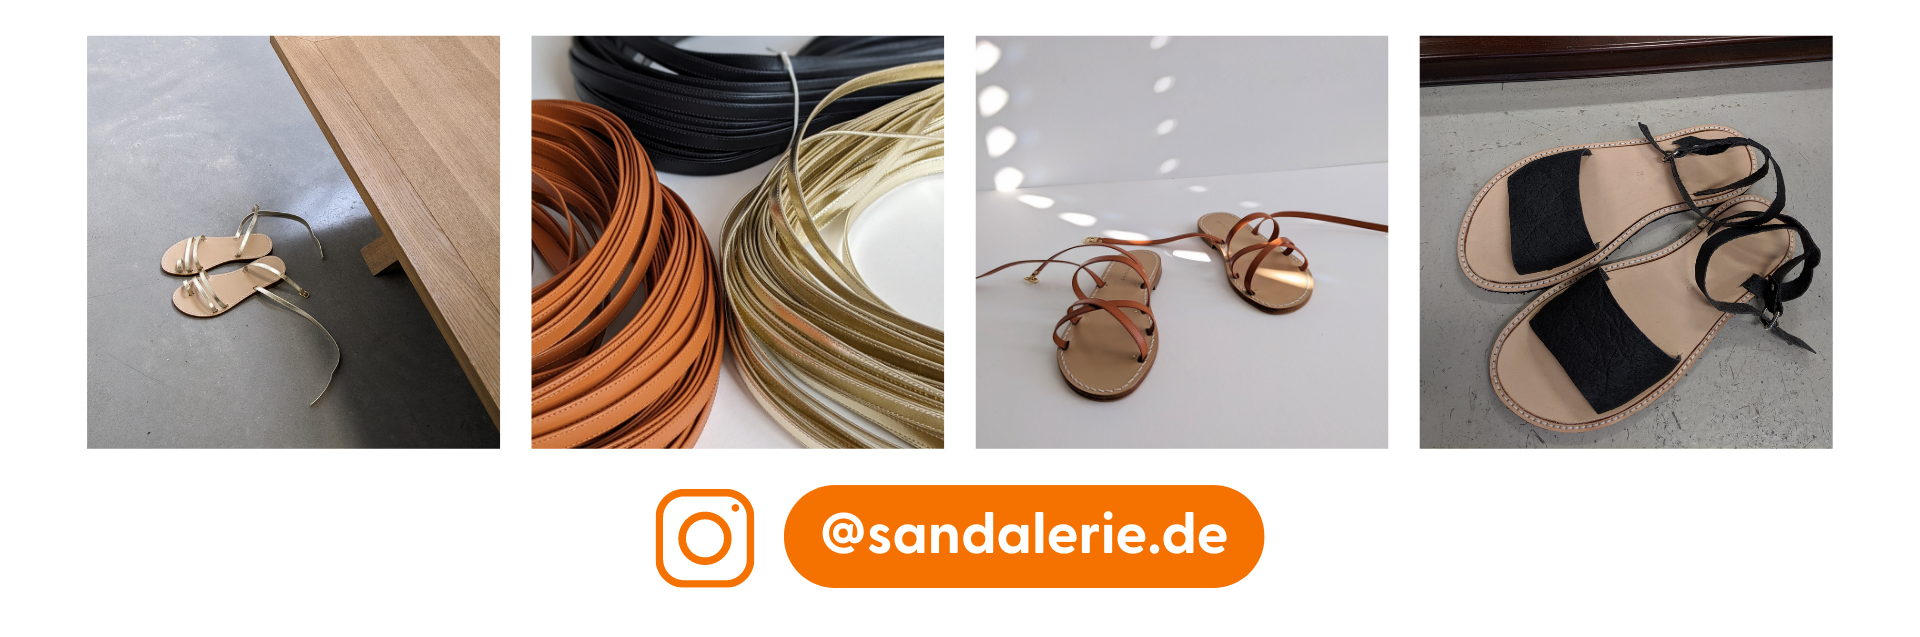 Sandalerie Instagram Account